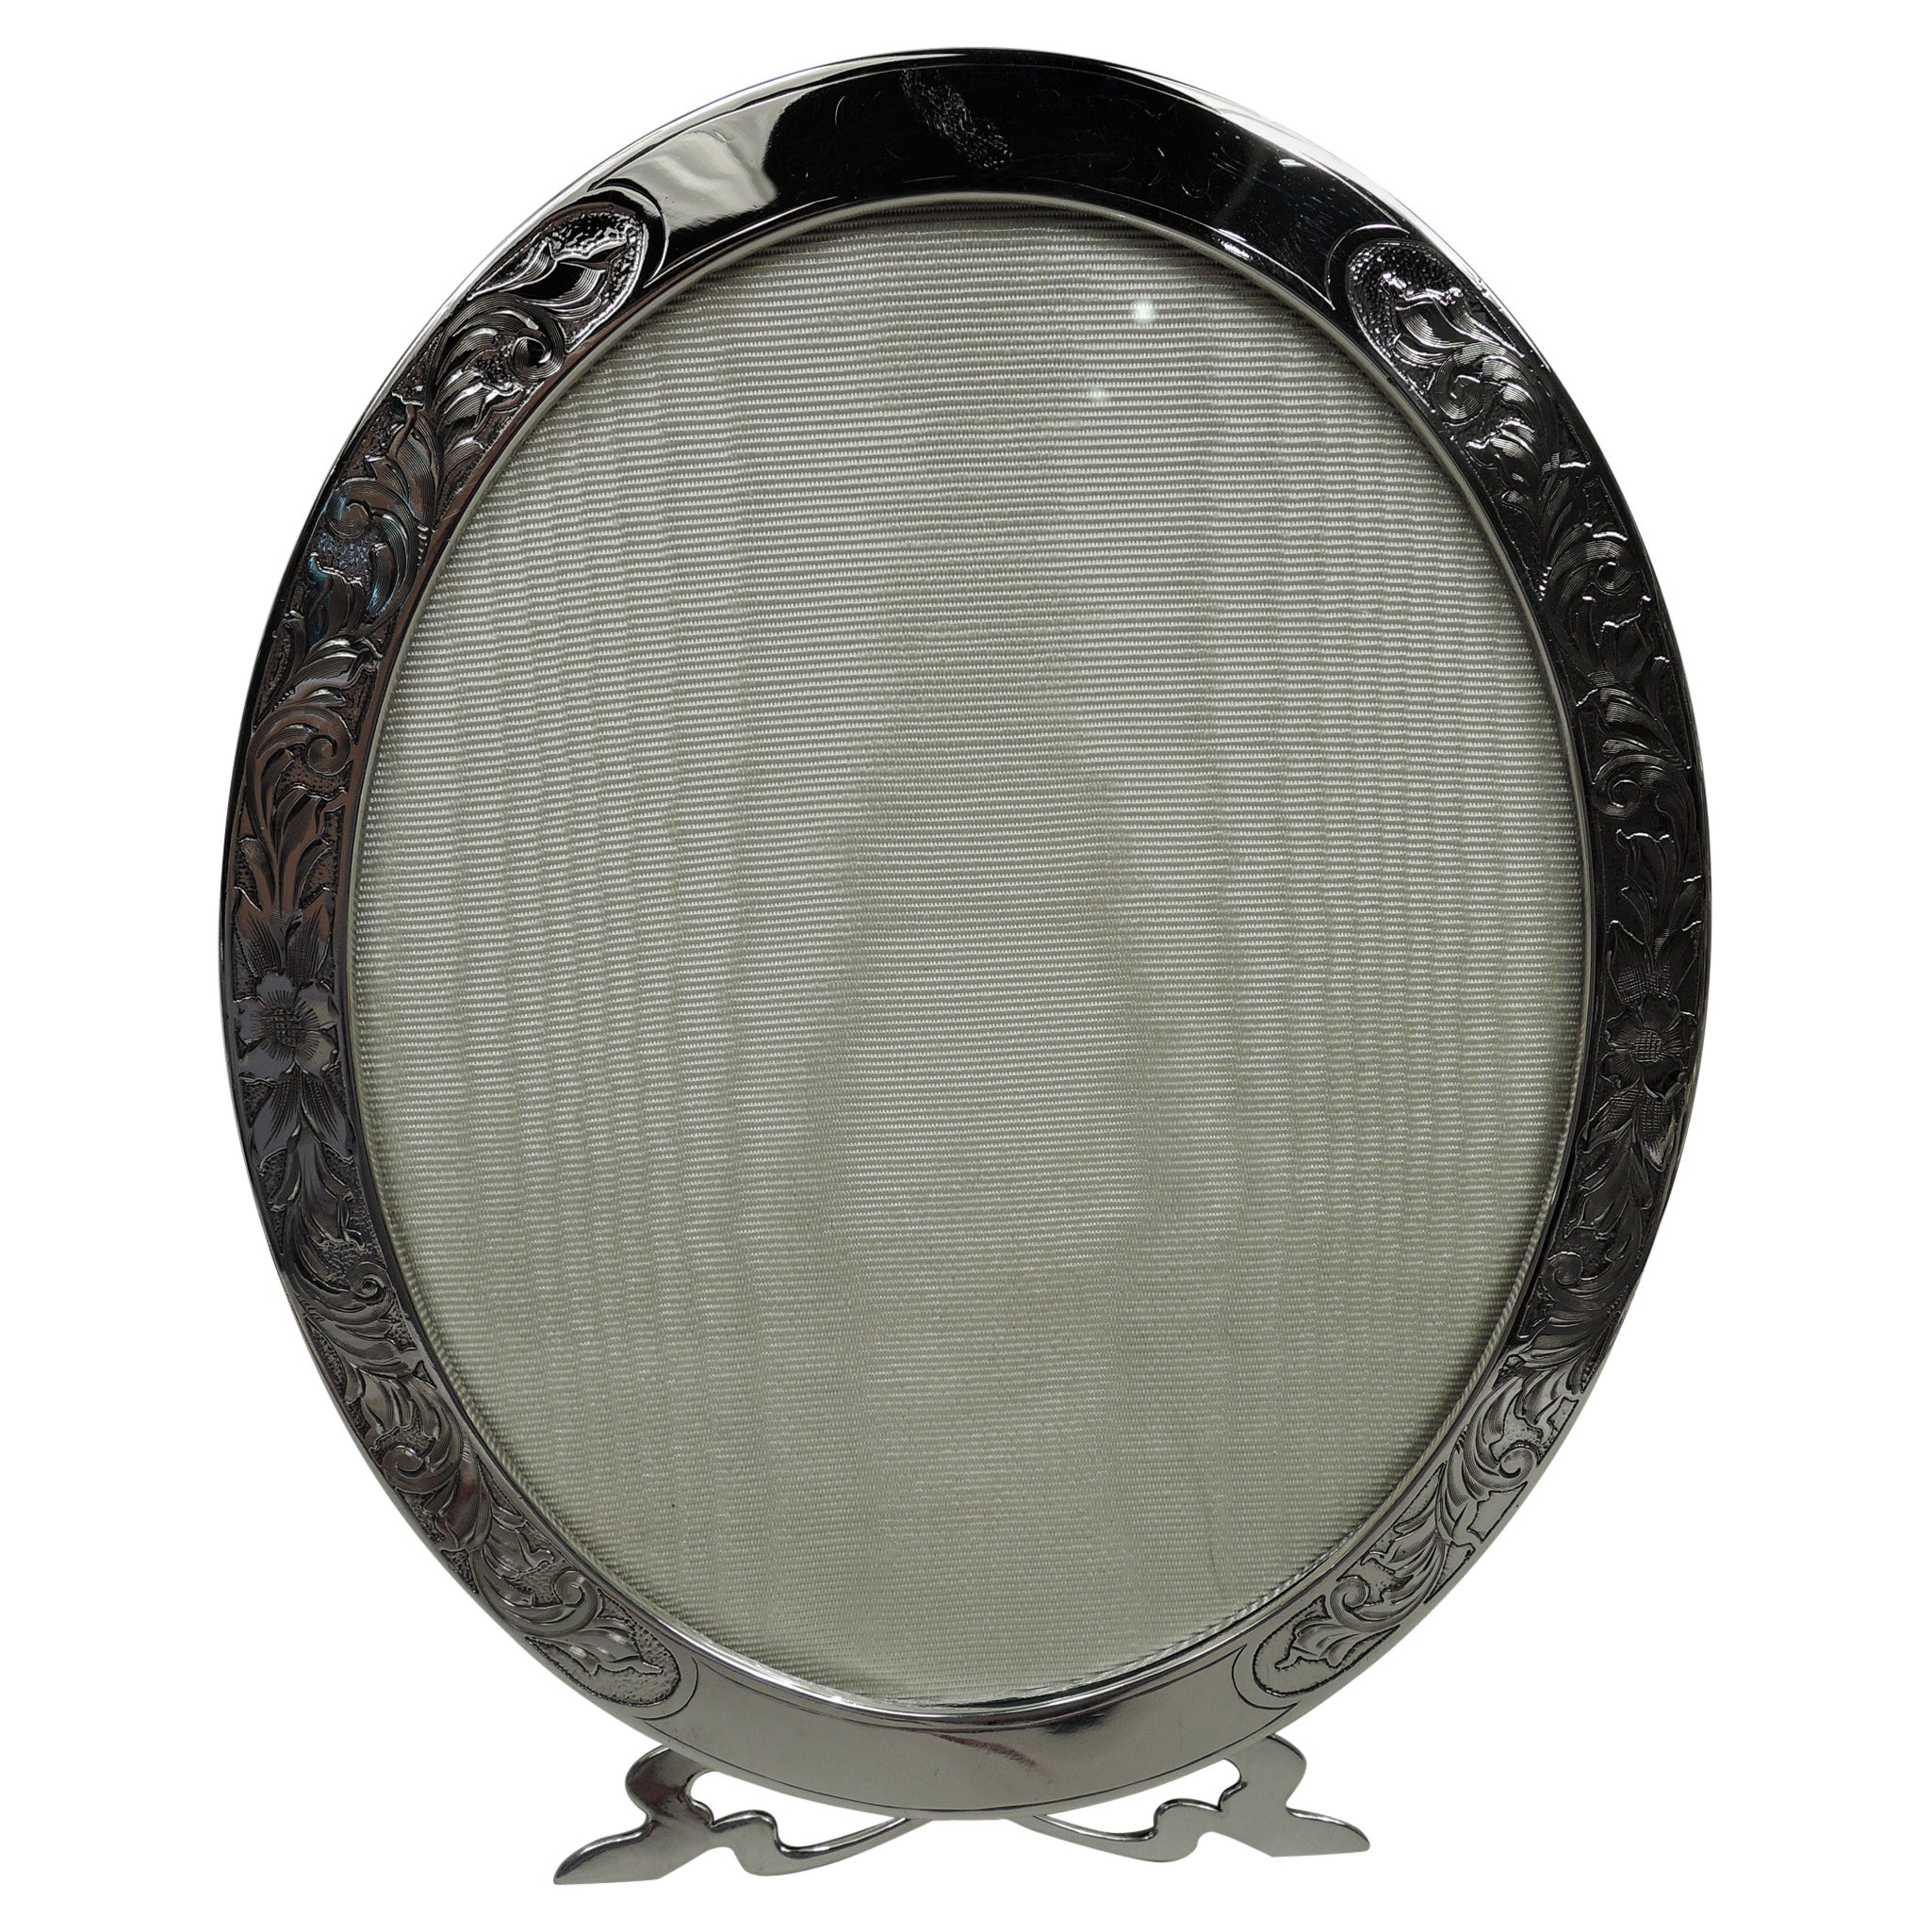 Unger Edwardian Art Nouveau Sterling Silver Oval Picture Frame